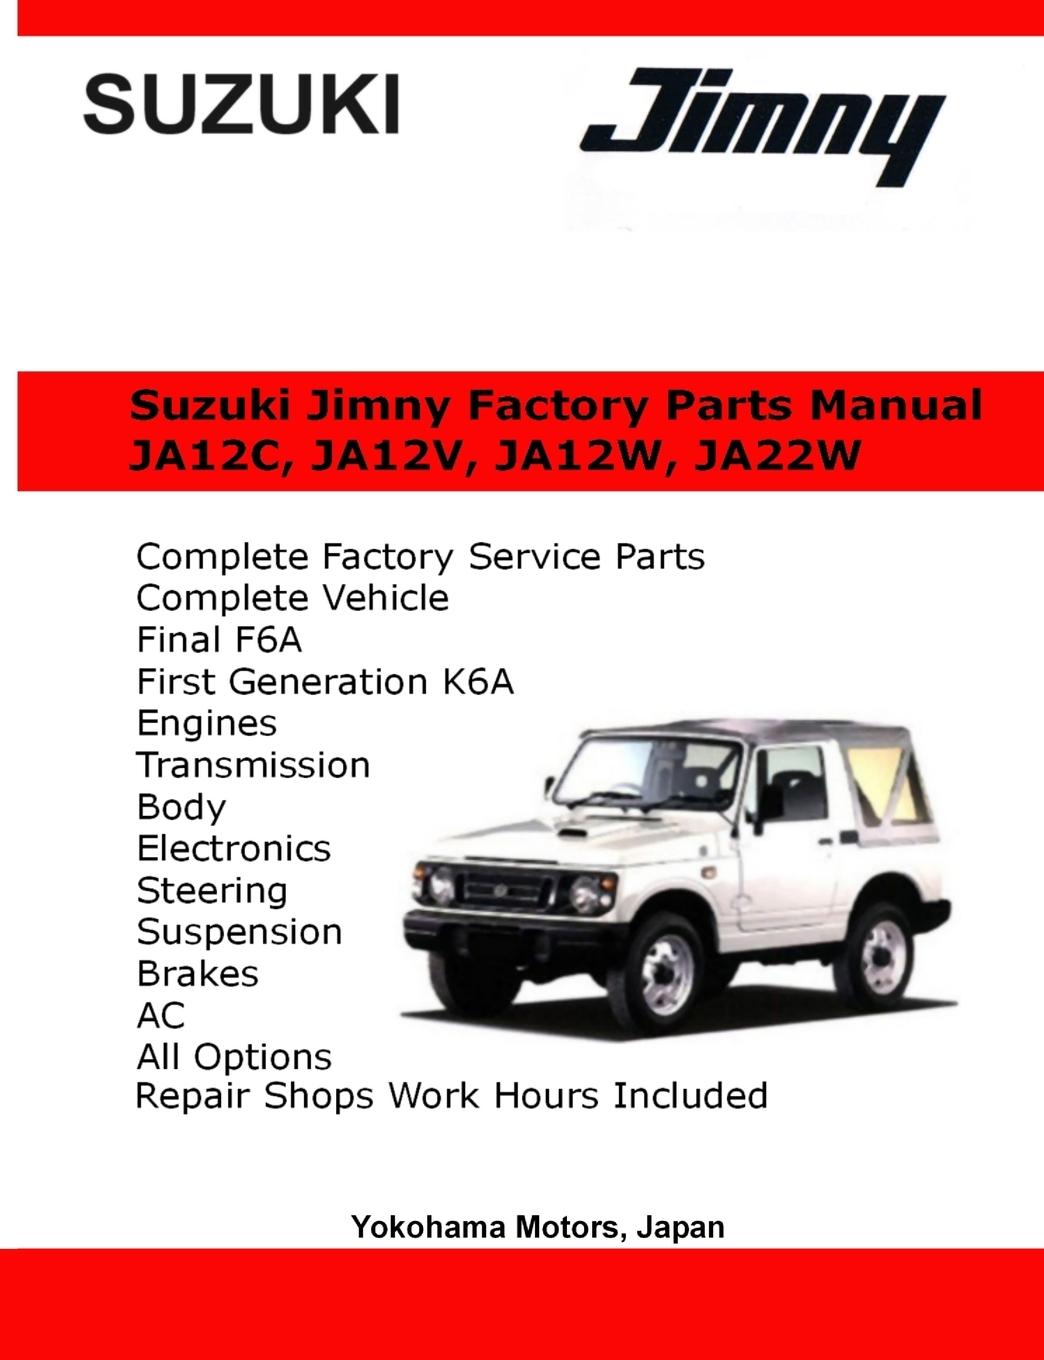 Carte Suzuki Jimny English Factory Parts Manual JA12, JA22W Series James Danko